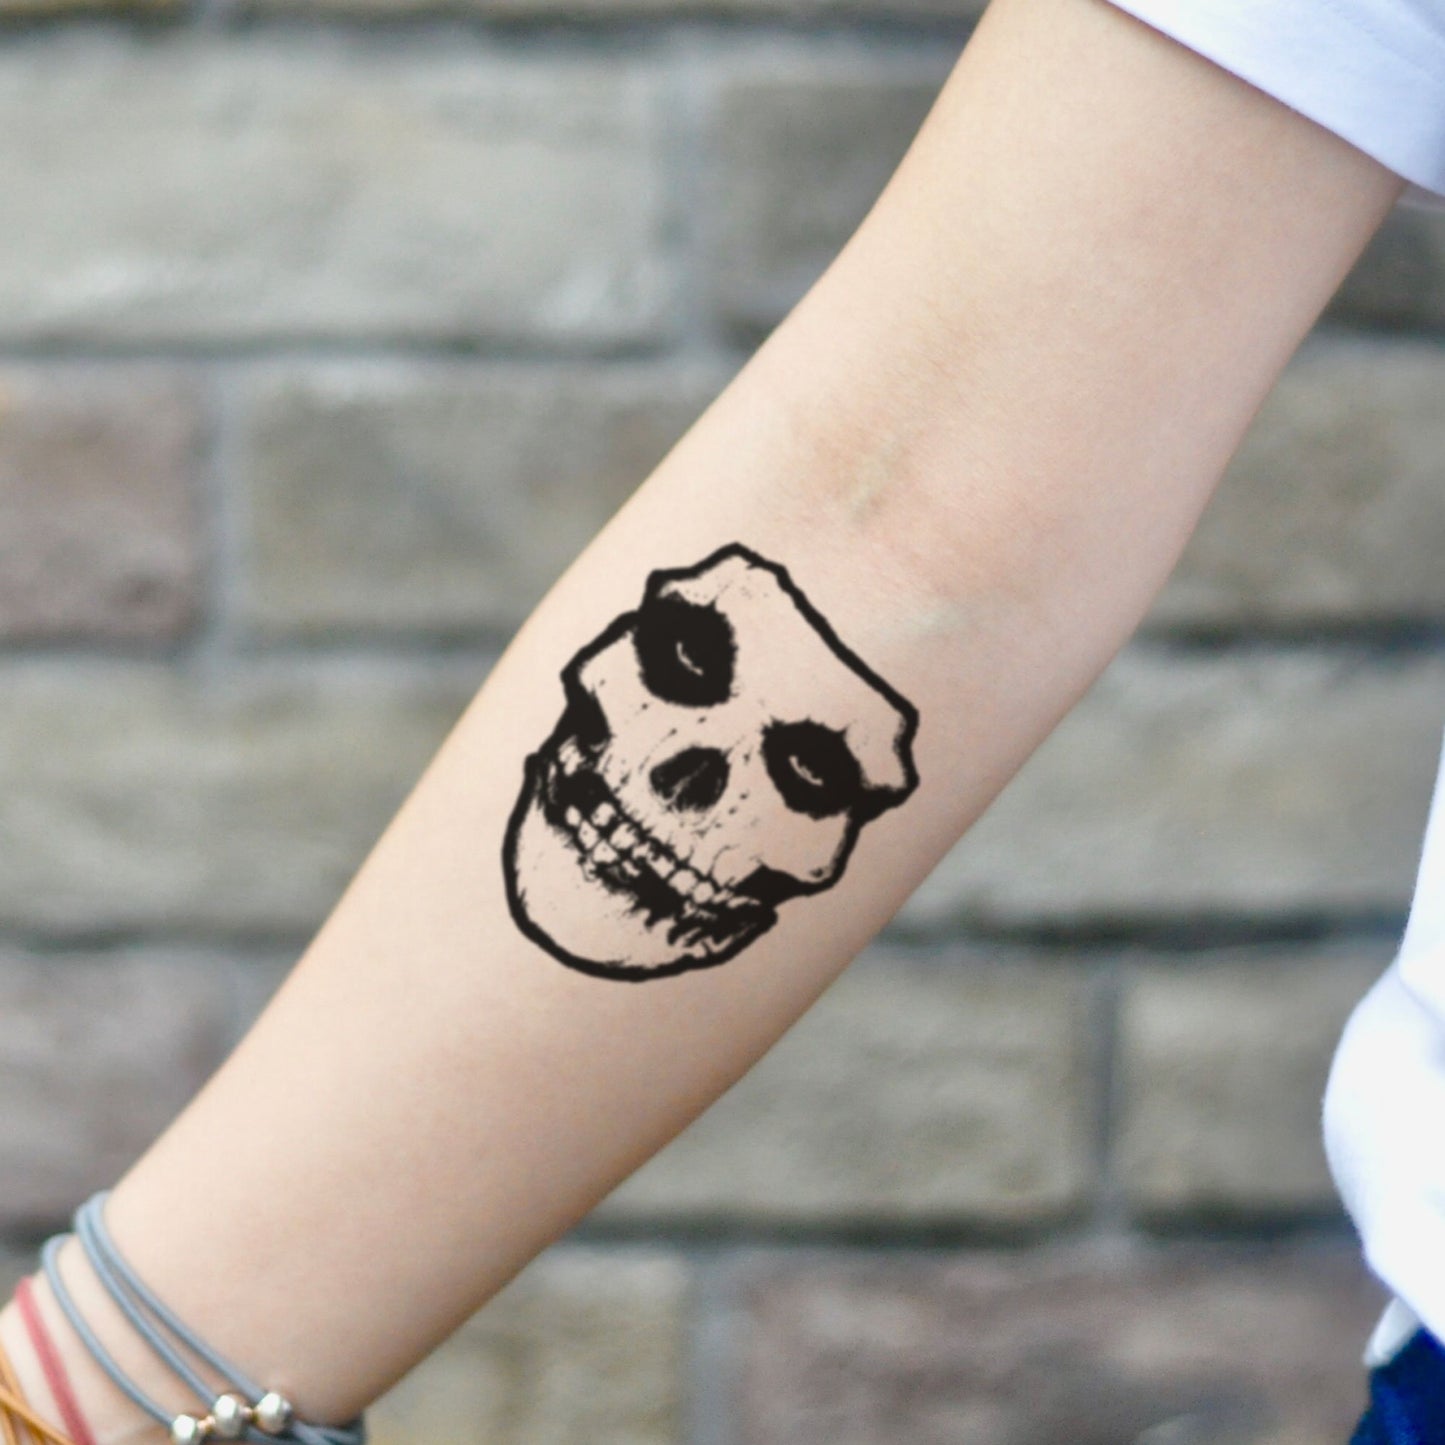 fake small crimson ghost Illustrative temporary tattoo sticker design idea on inner arm